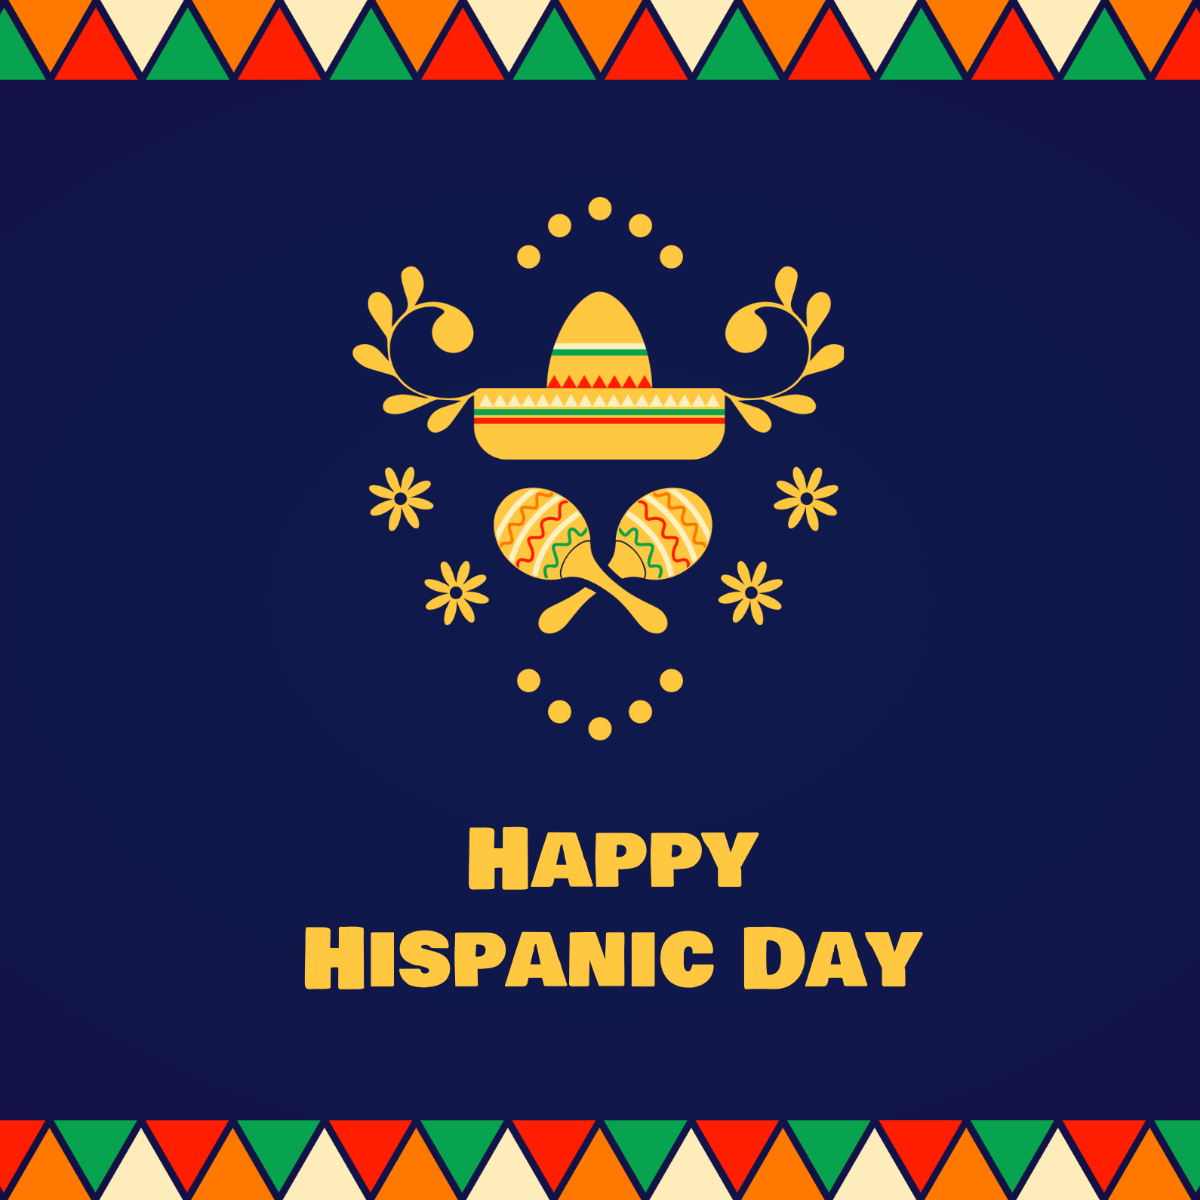 Hispanic Day LinkedIn Post